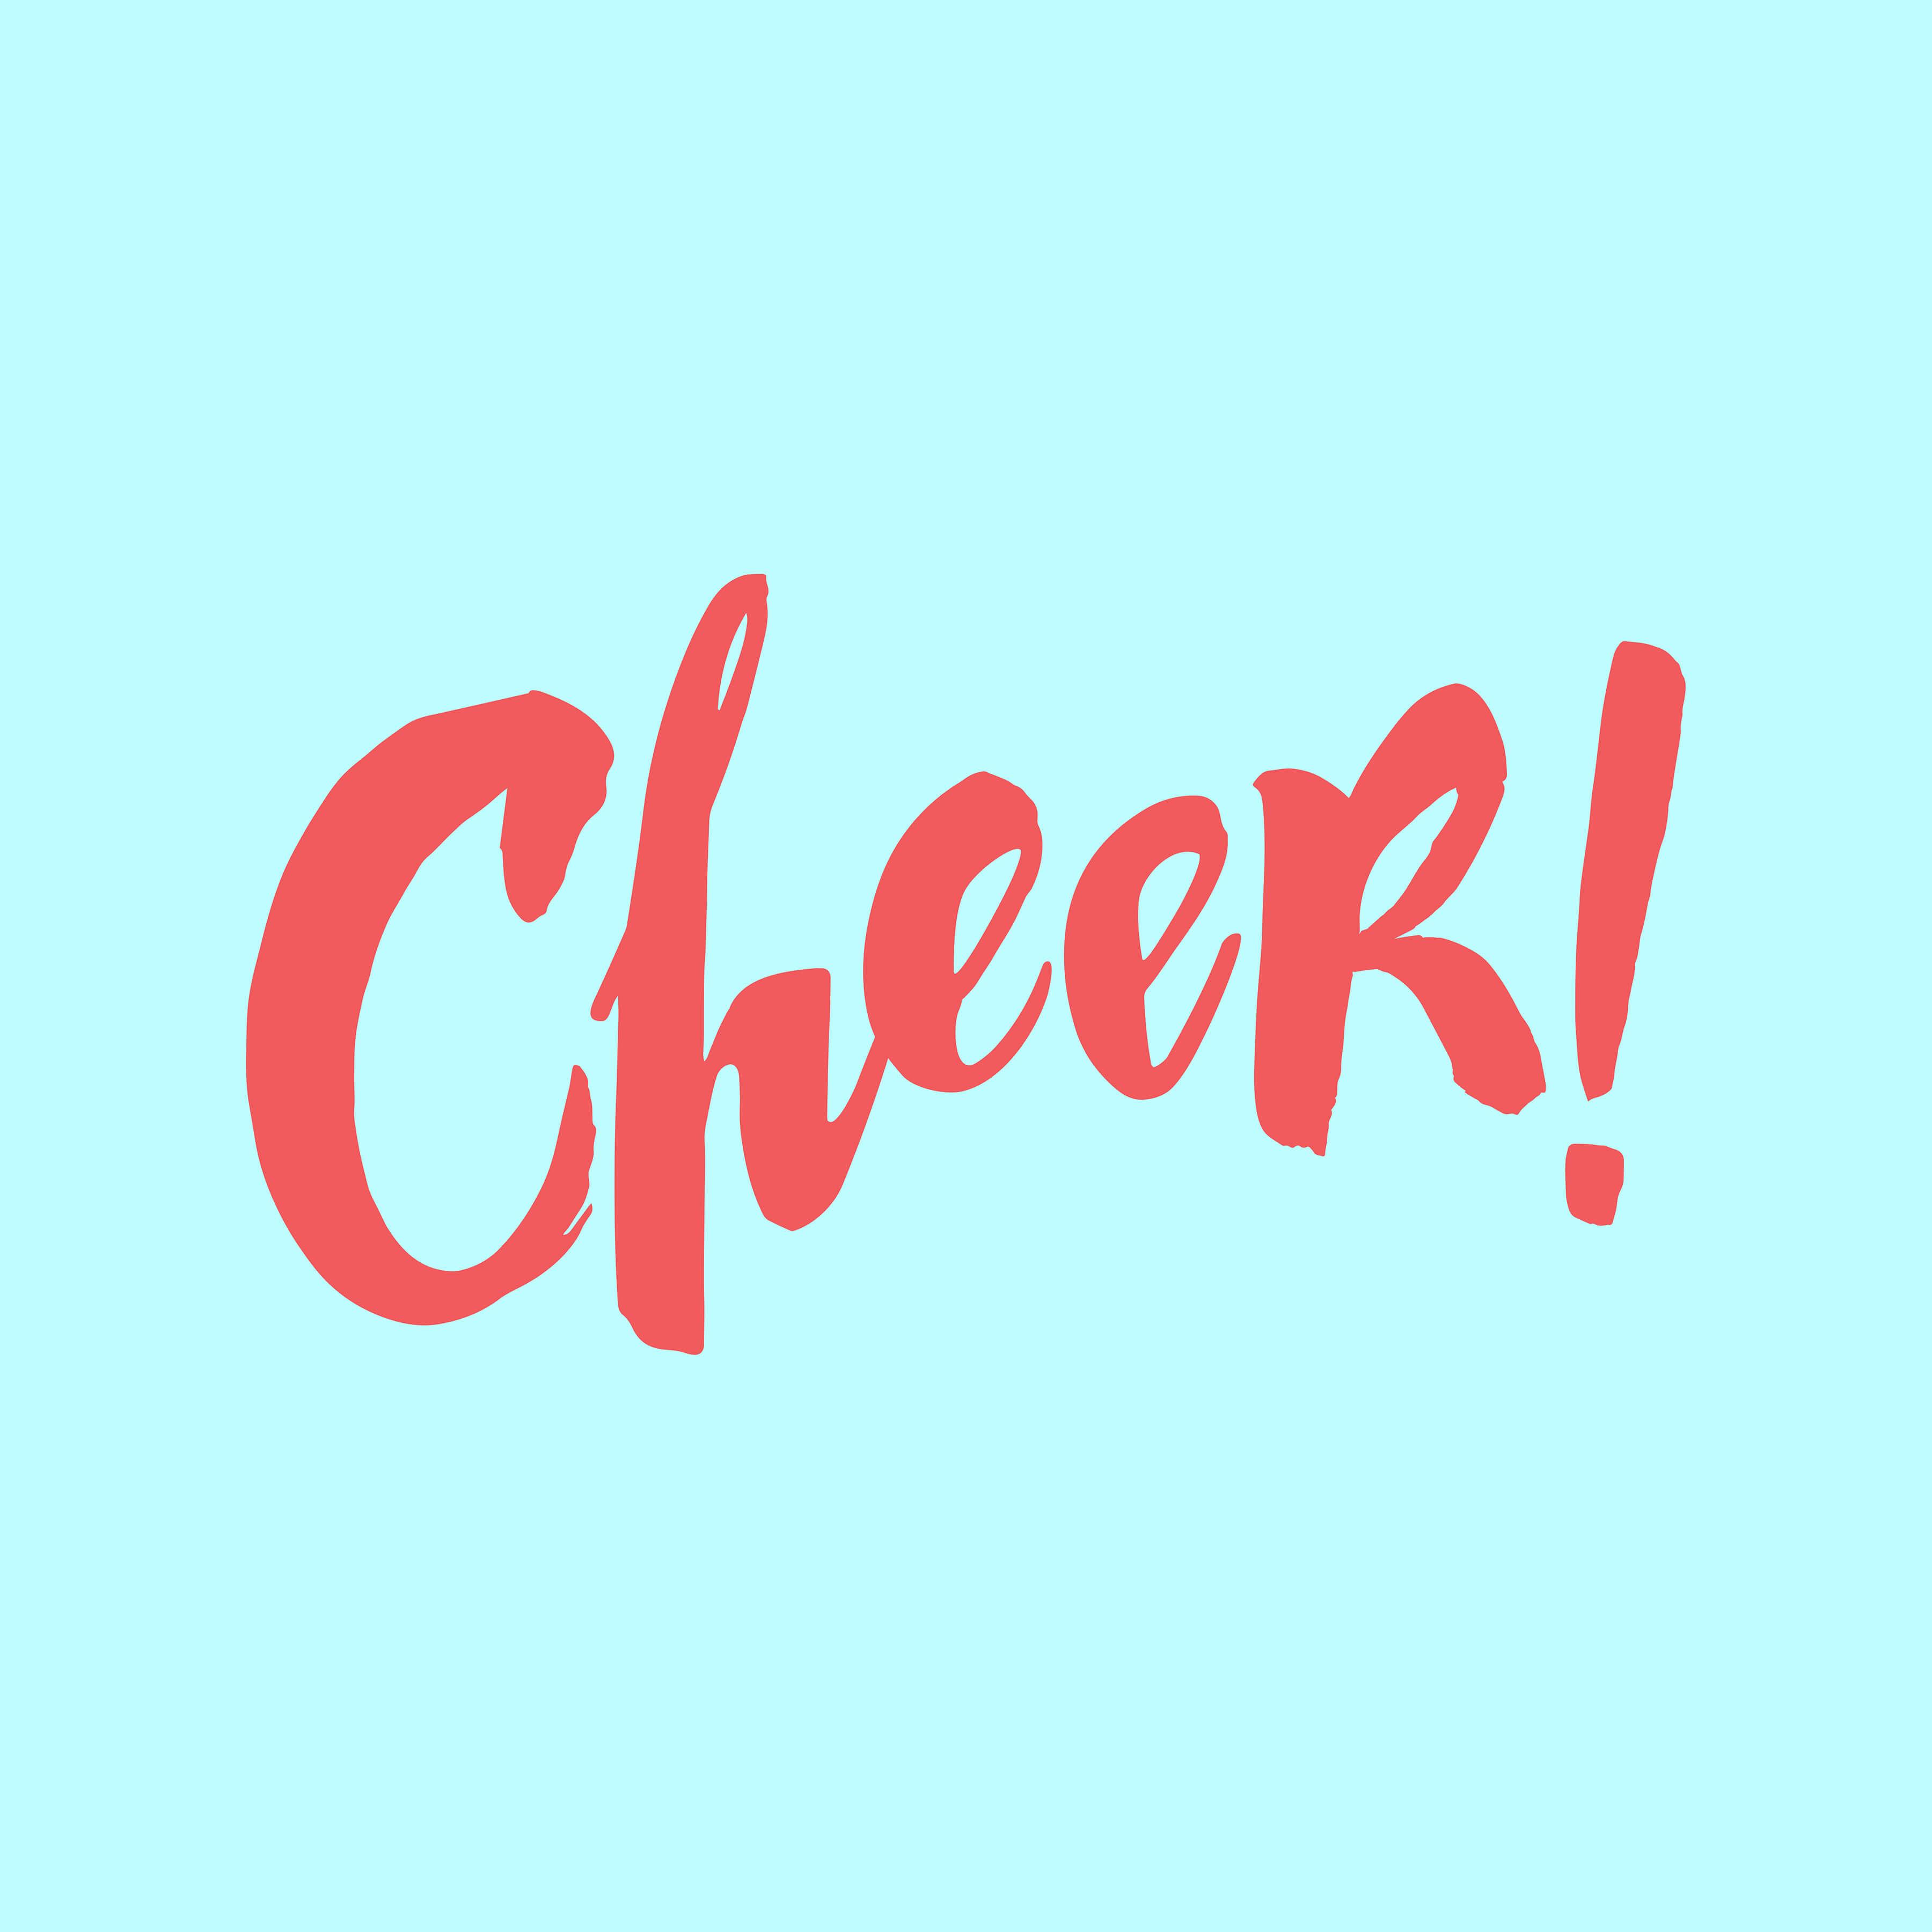 Cheer Logo - Cheer! Logo Type Treatment BRAND AGENCY